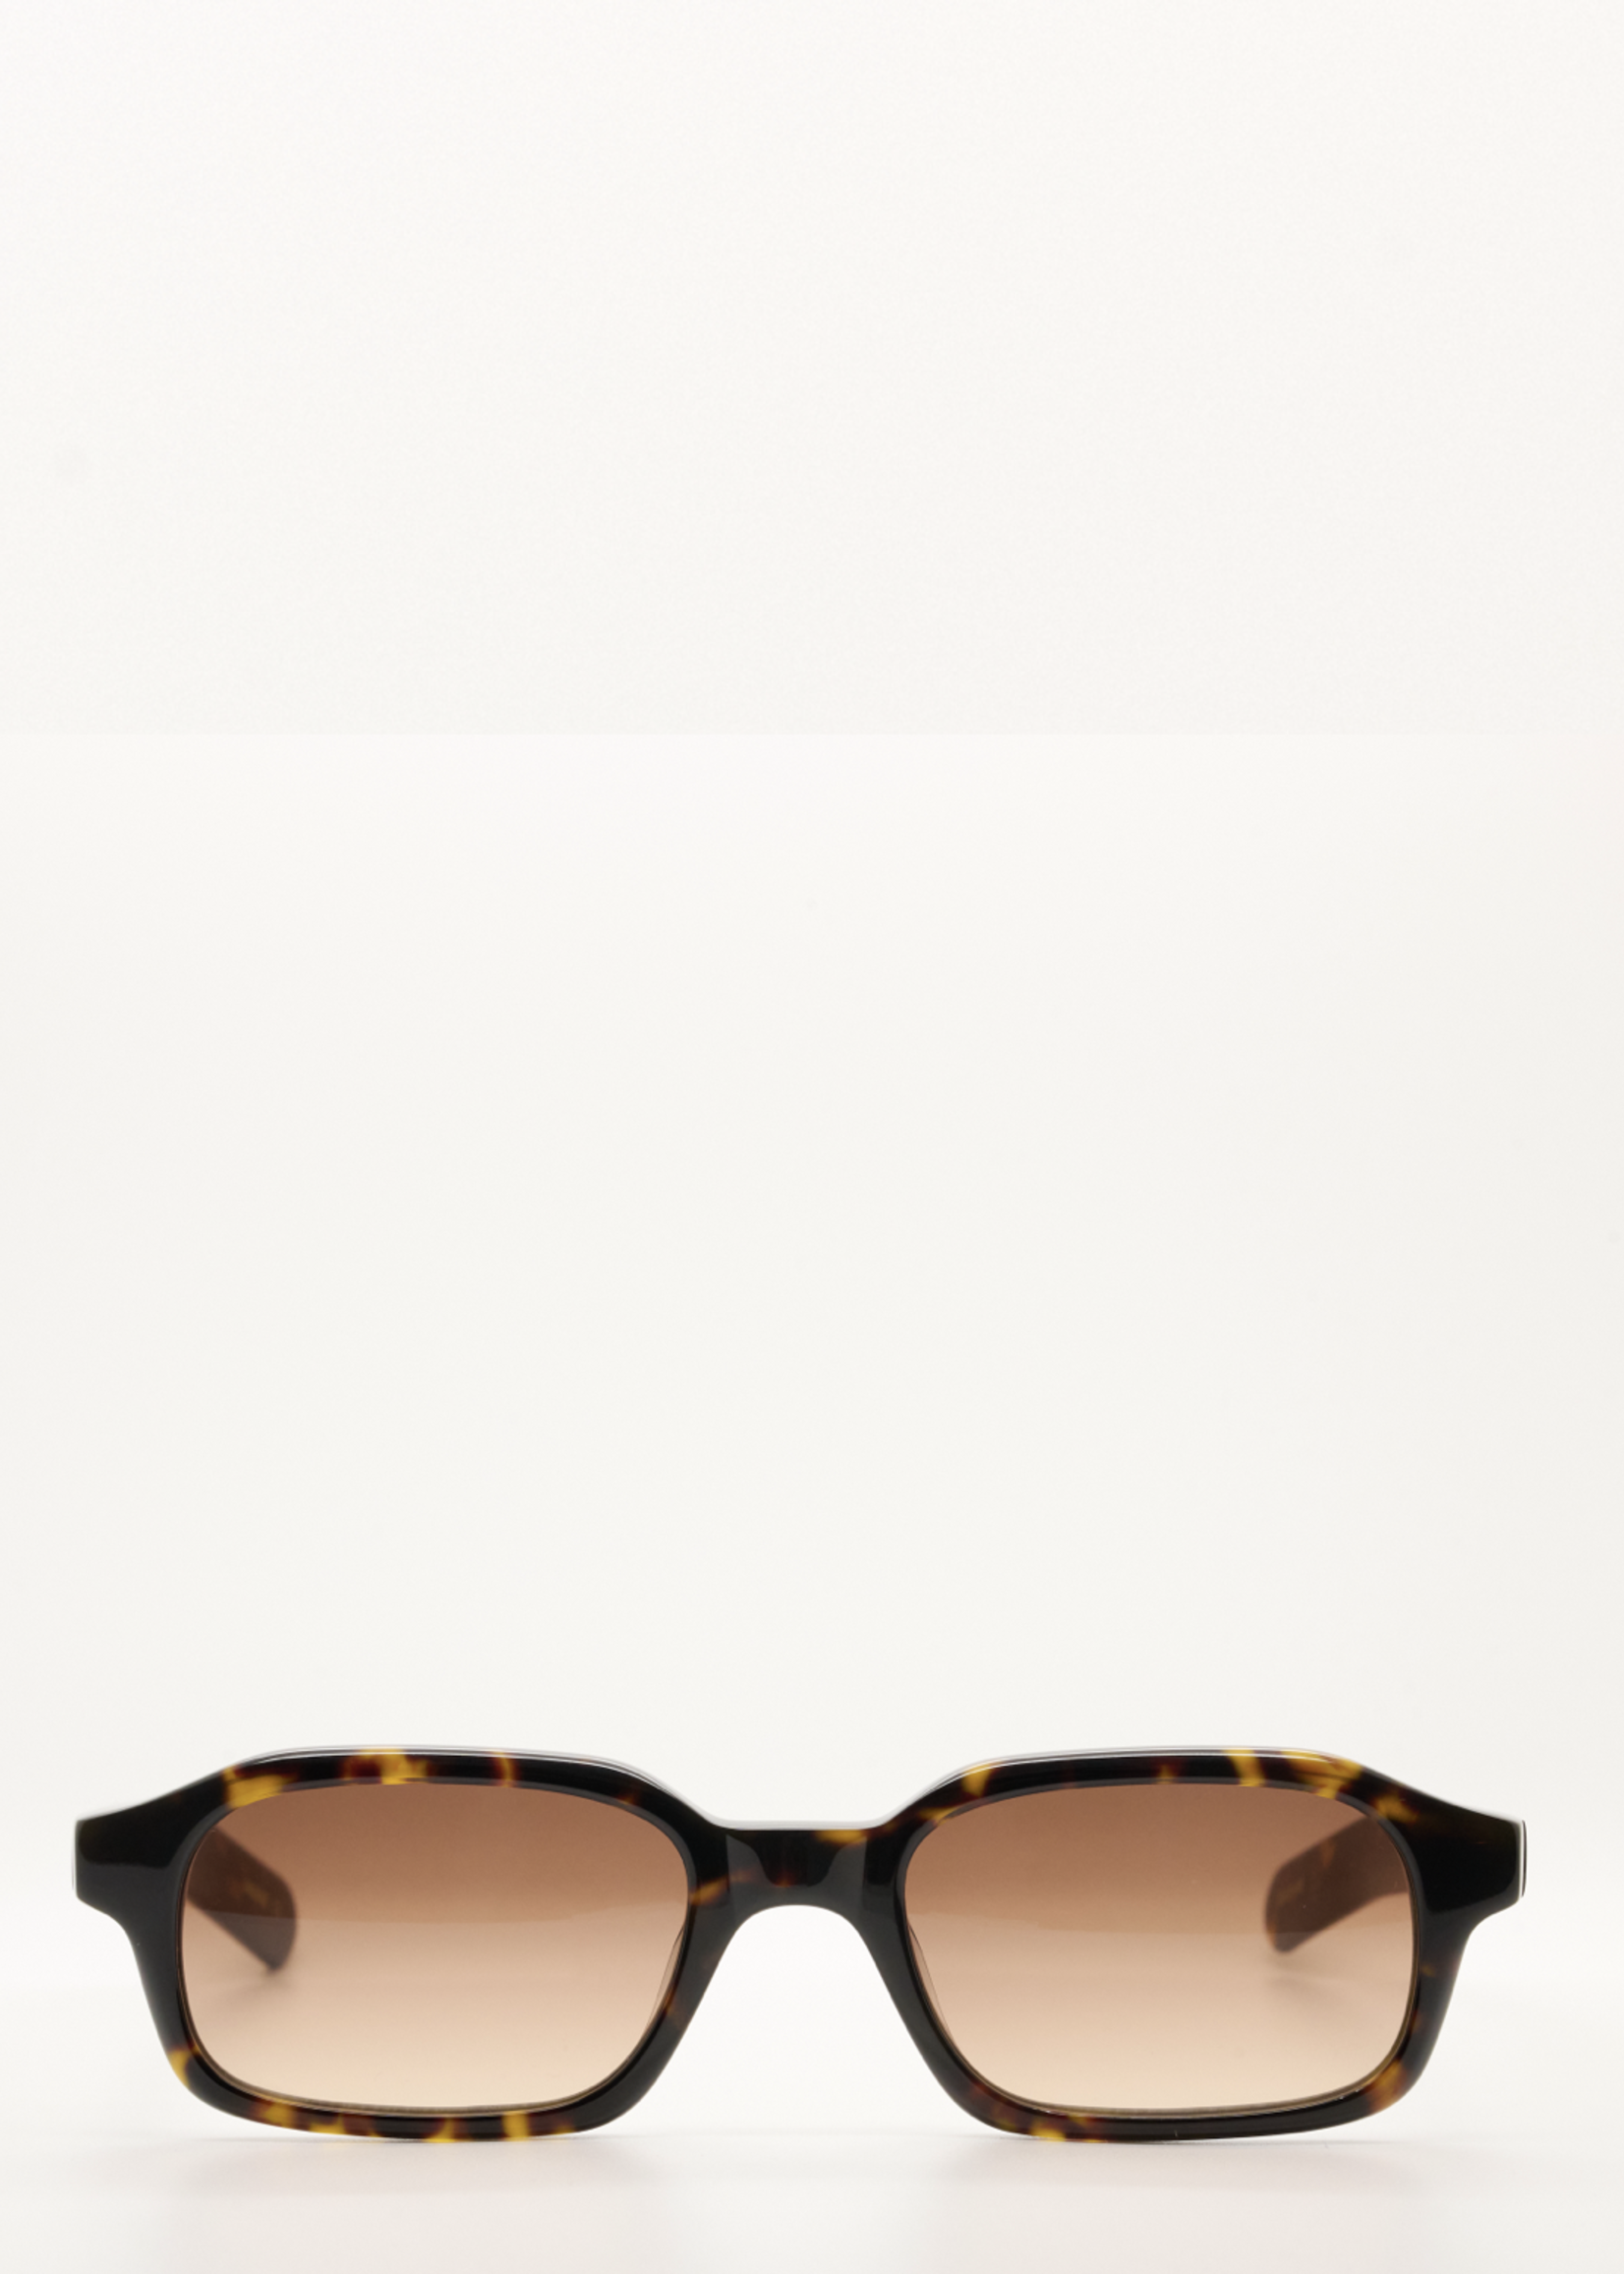 FLATLIST HANKY Sunglasses in Dark tortoise with Brown Gradient Lens